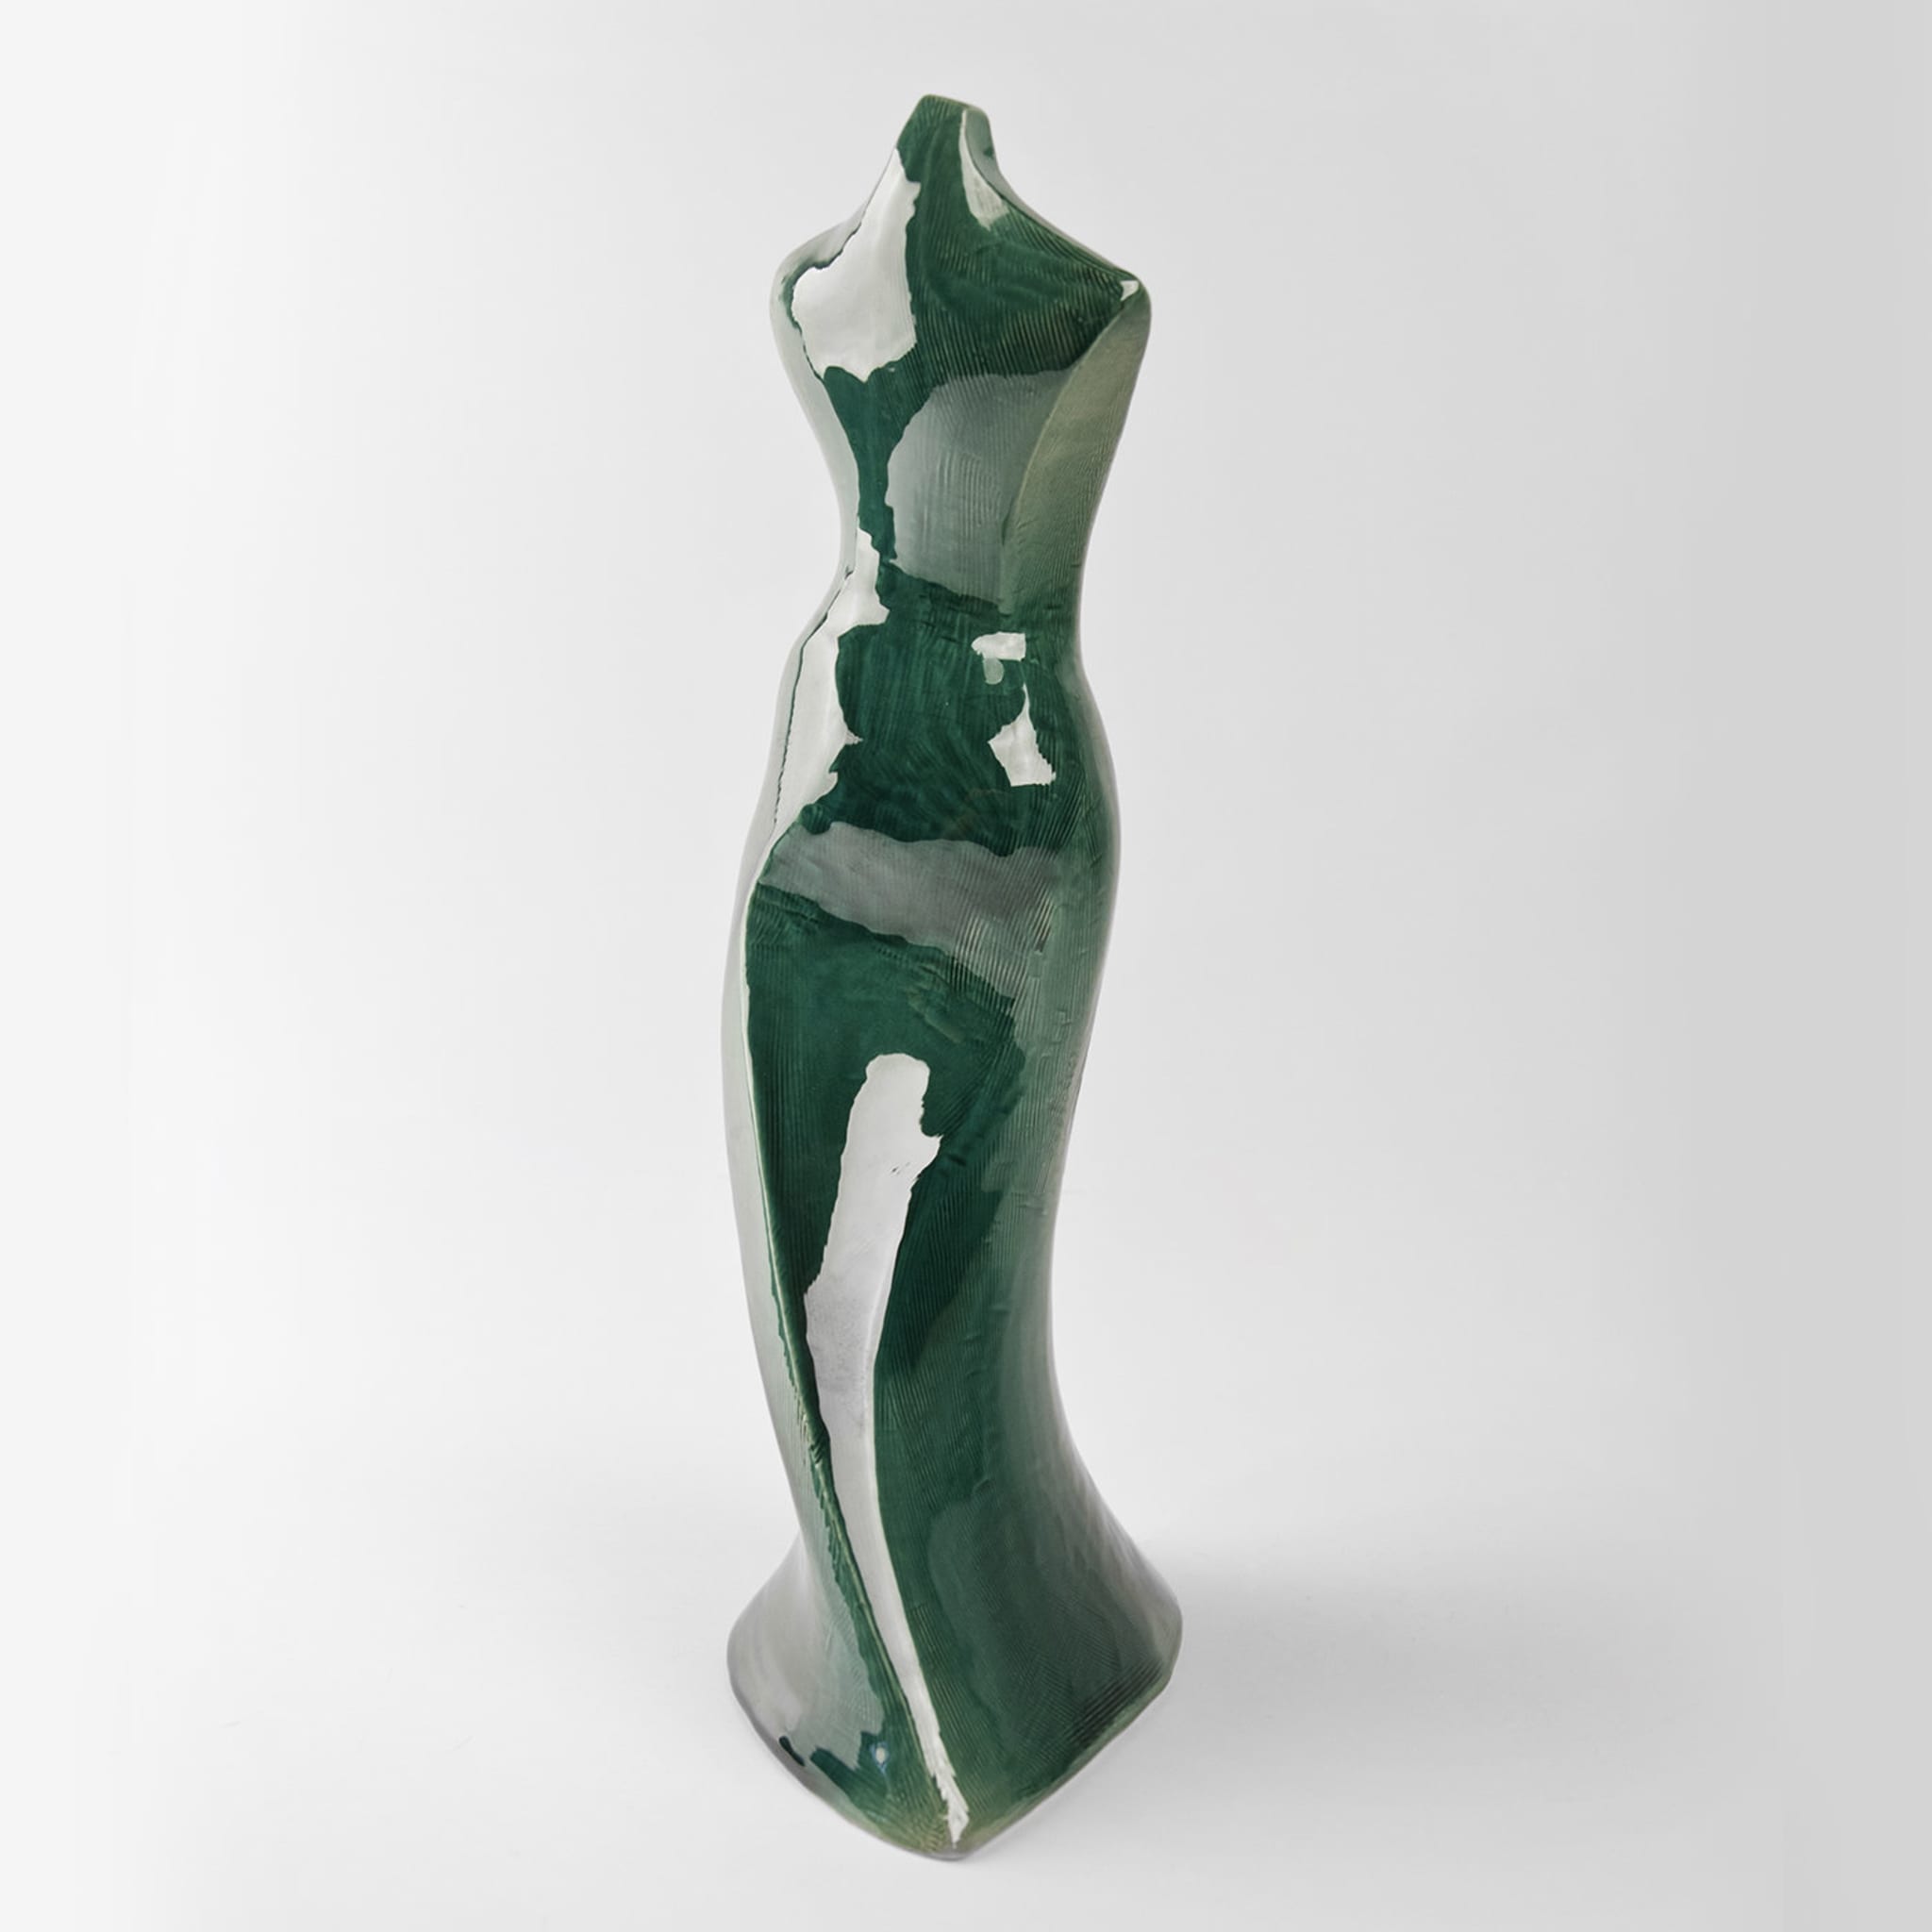 Greta Green Sculpture - Alternative view 3